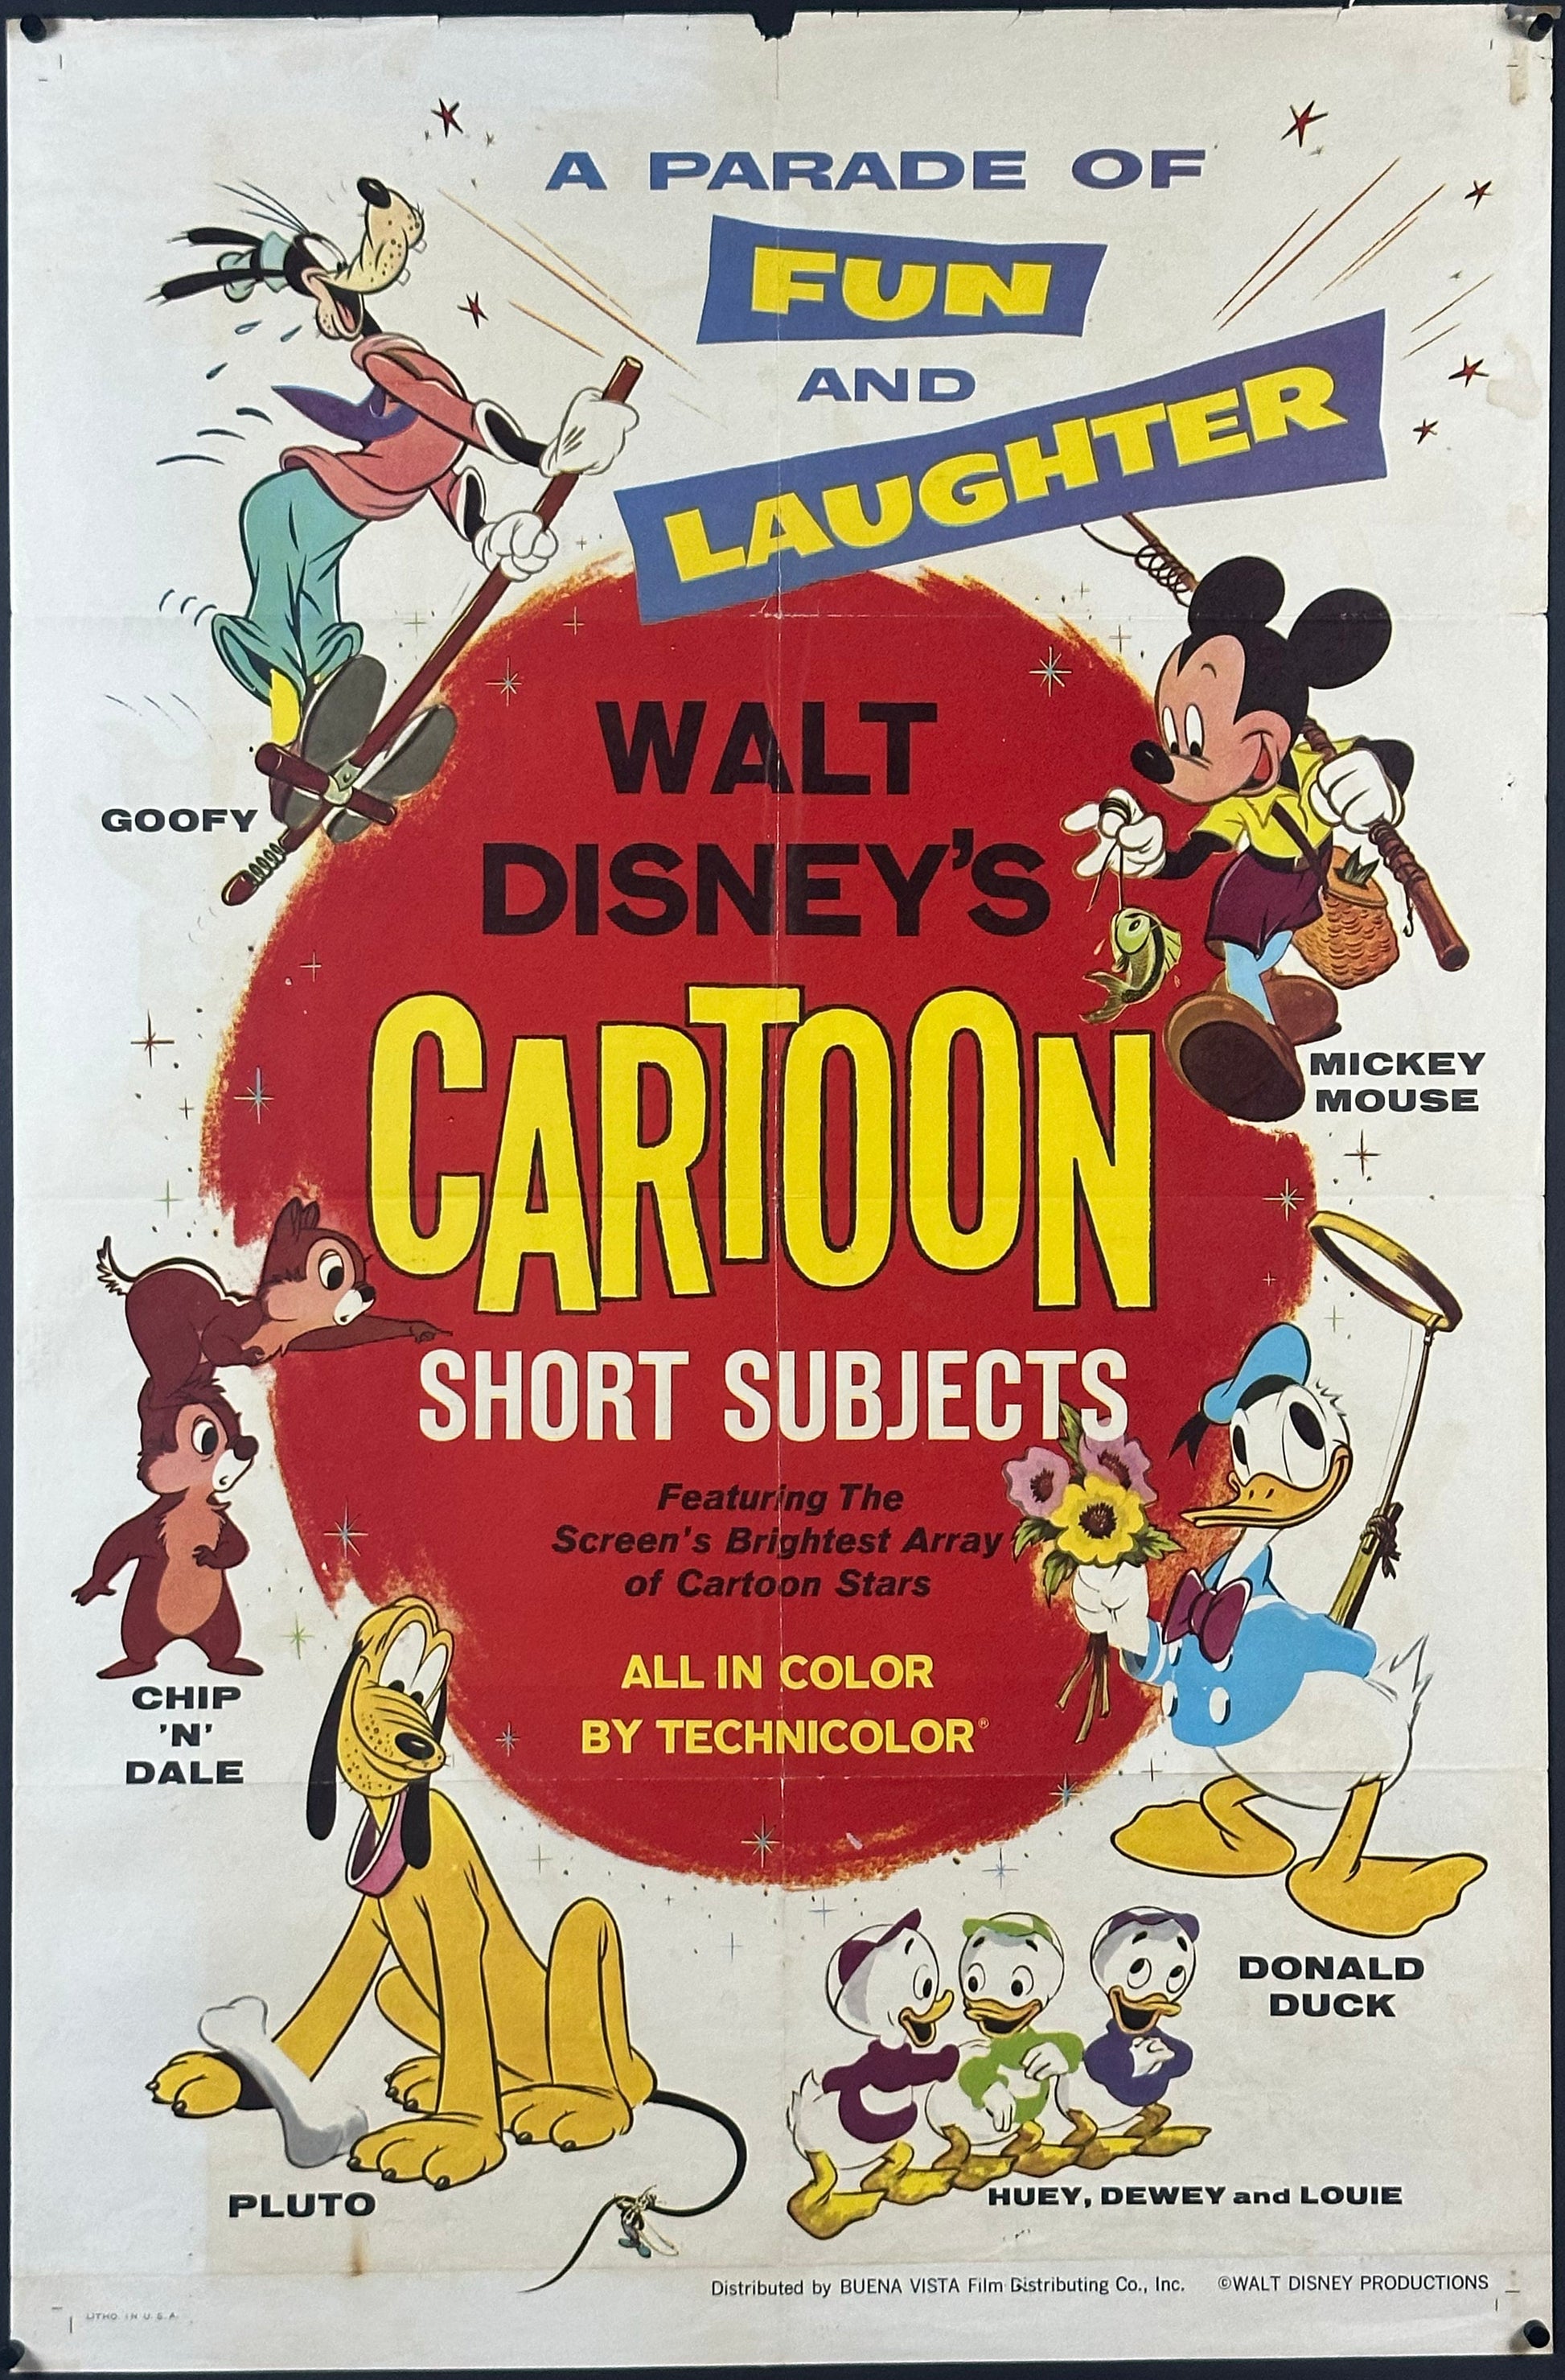 Walt Disney's Cartoon Short Subjects - posterpalace.com